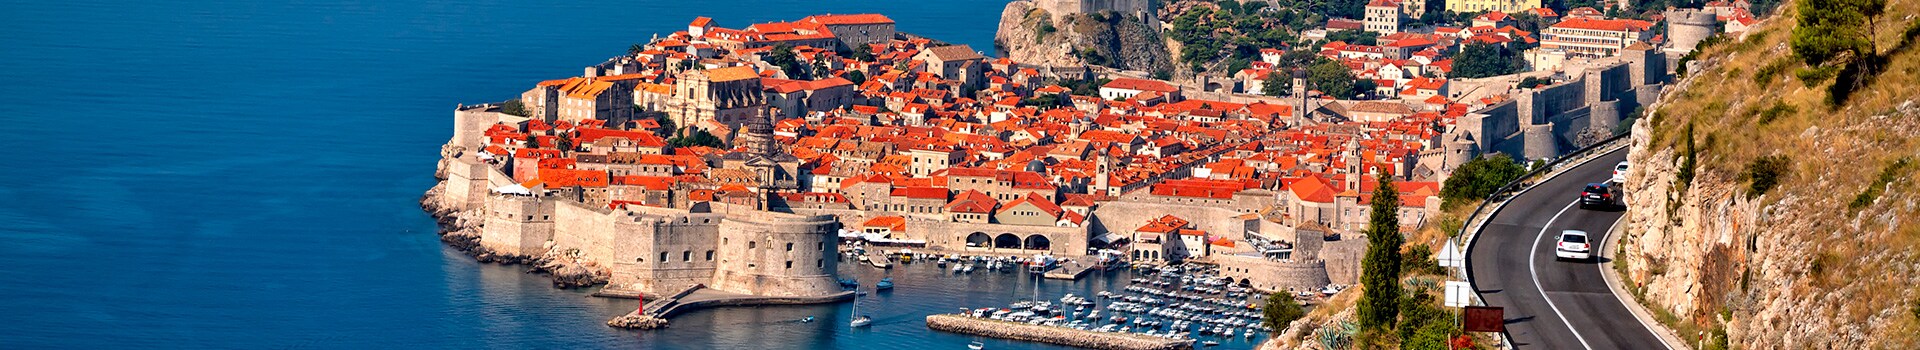 Saragozza - Dubrovnik